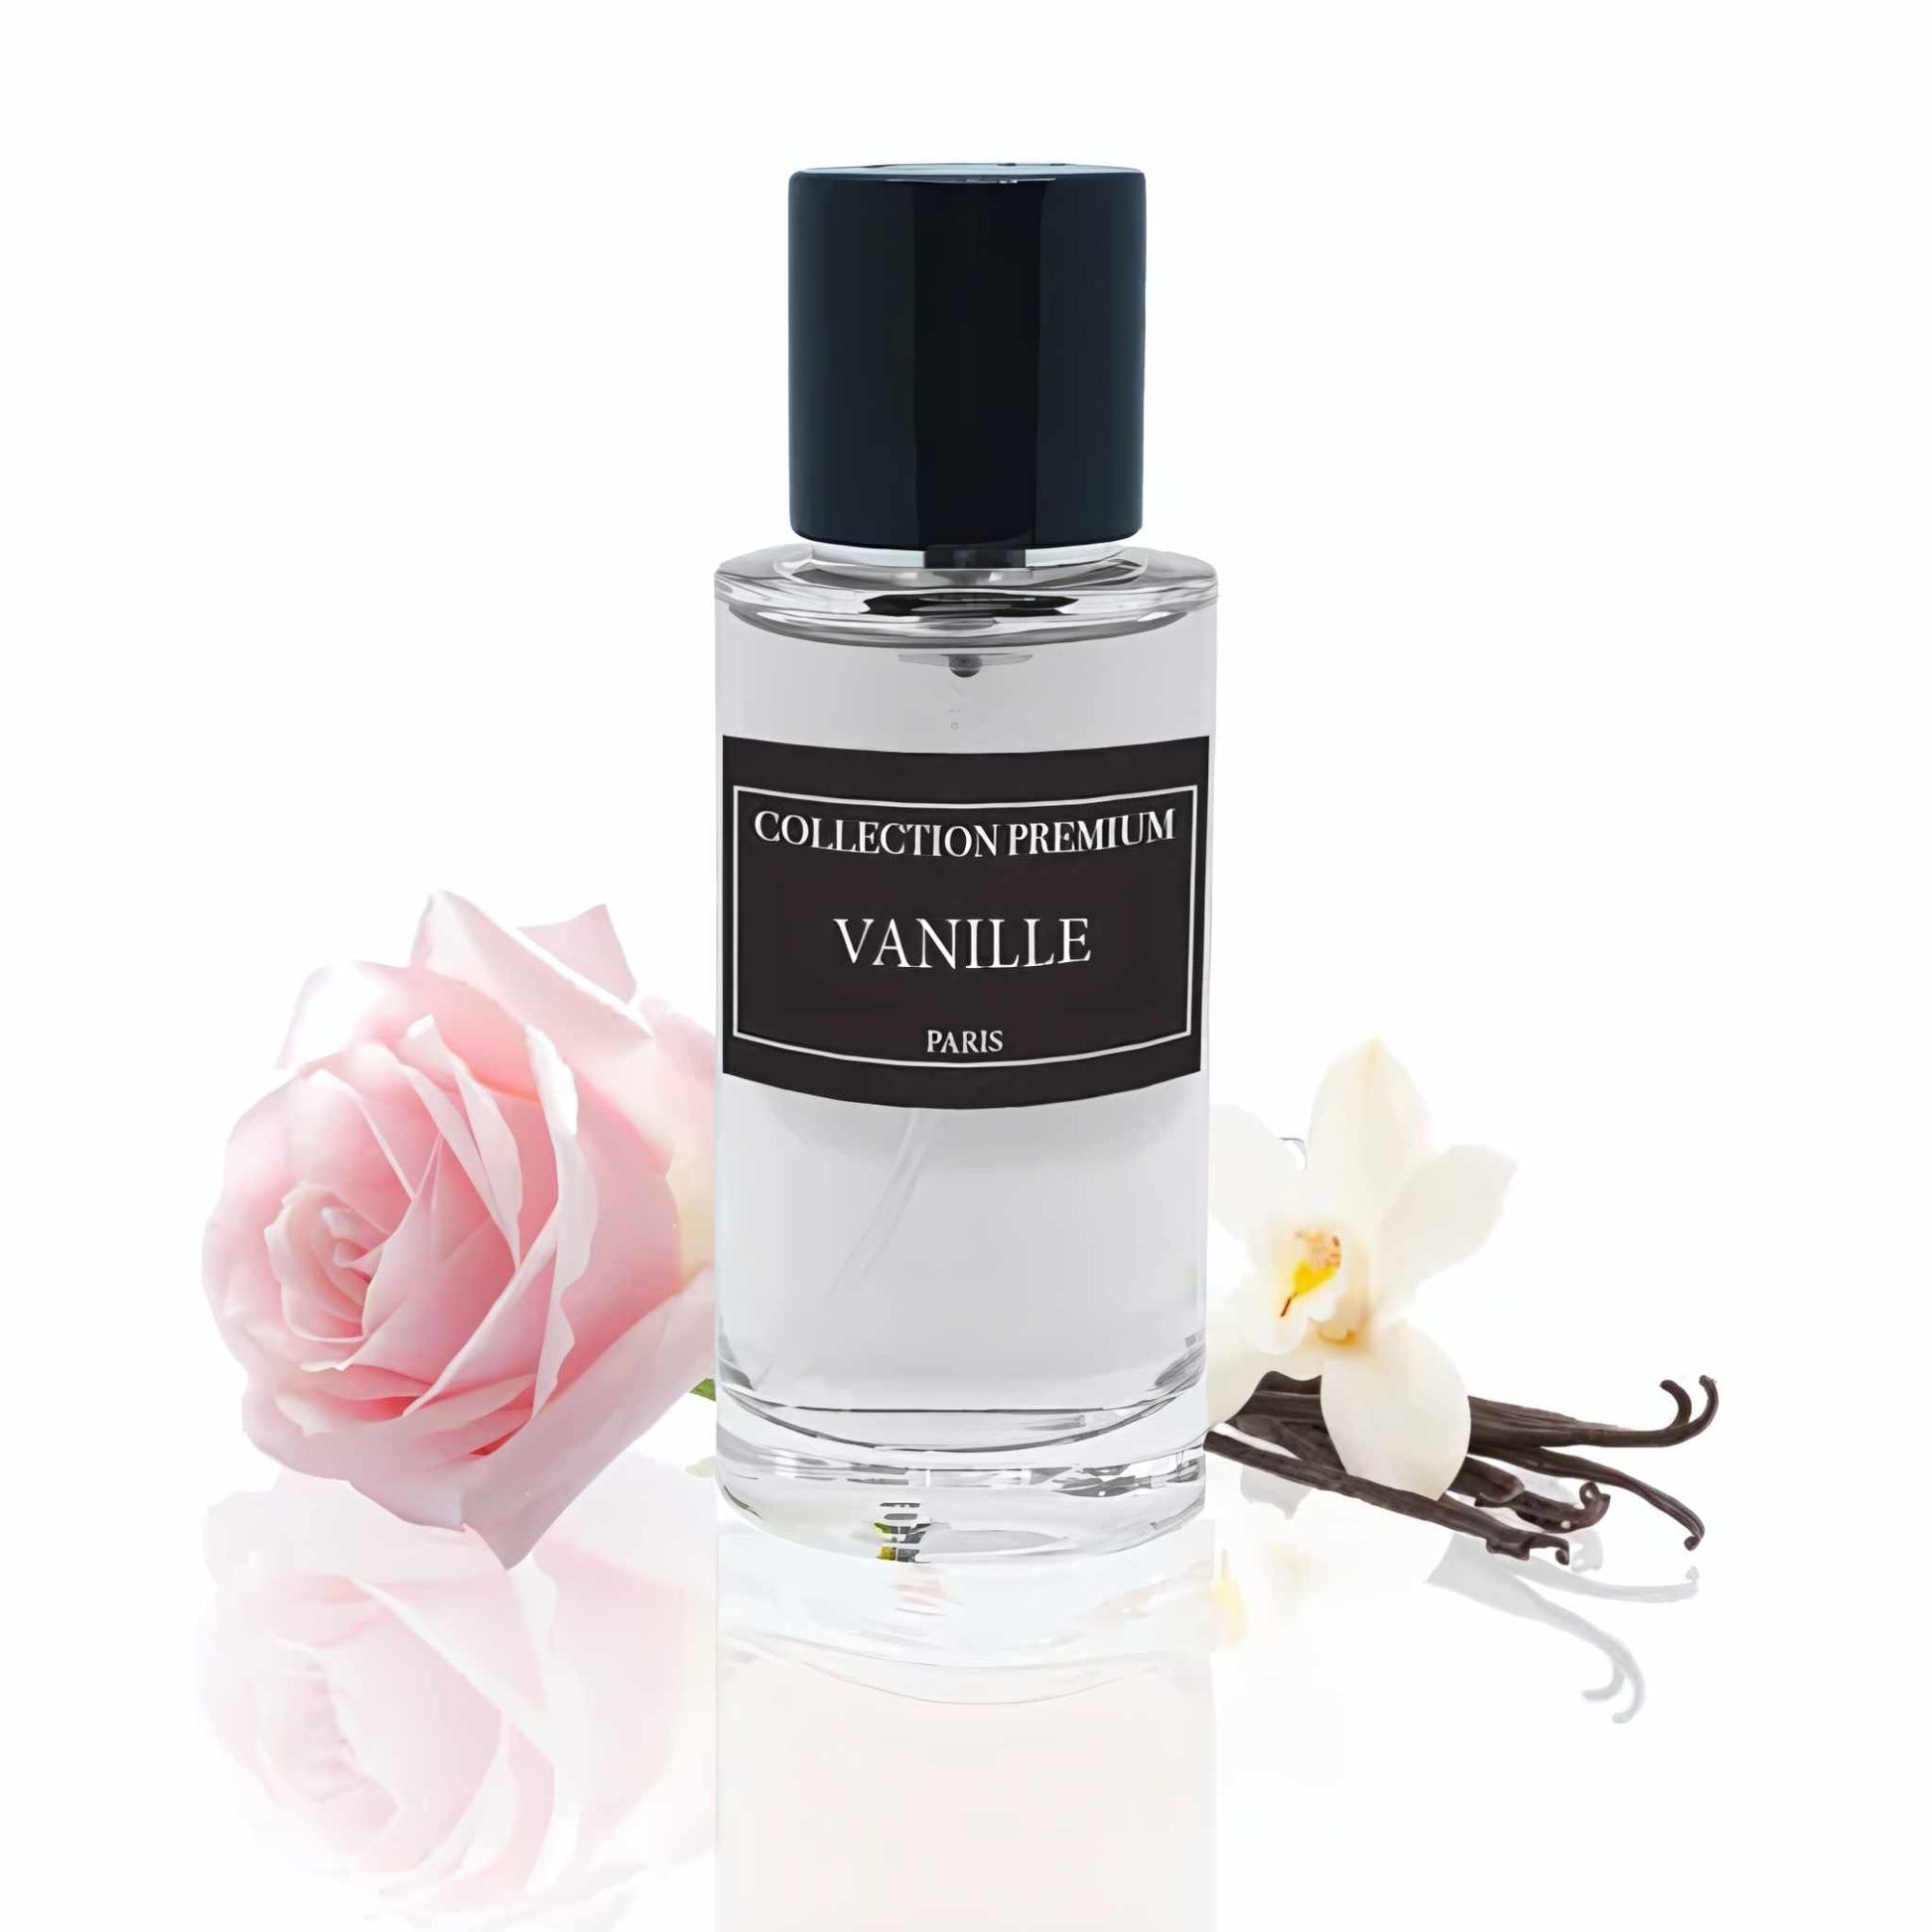 Collection Premium Paris Vanille Extrait de Parfum 50 ml